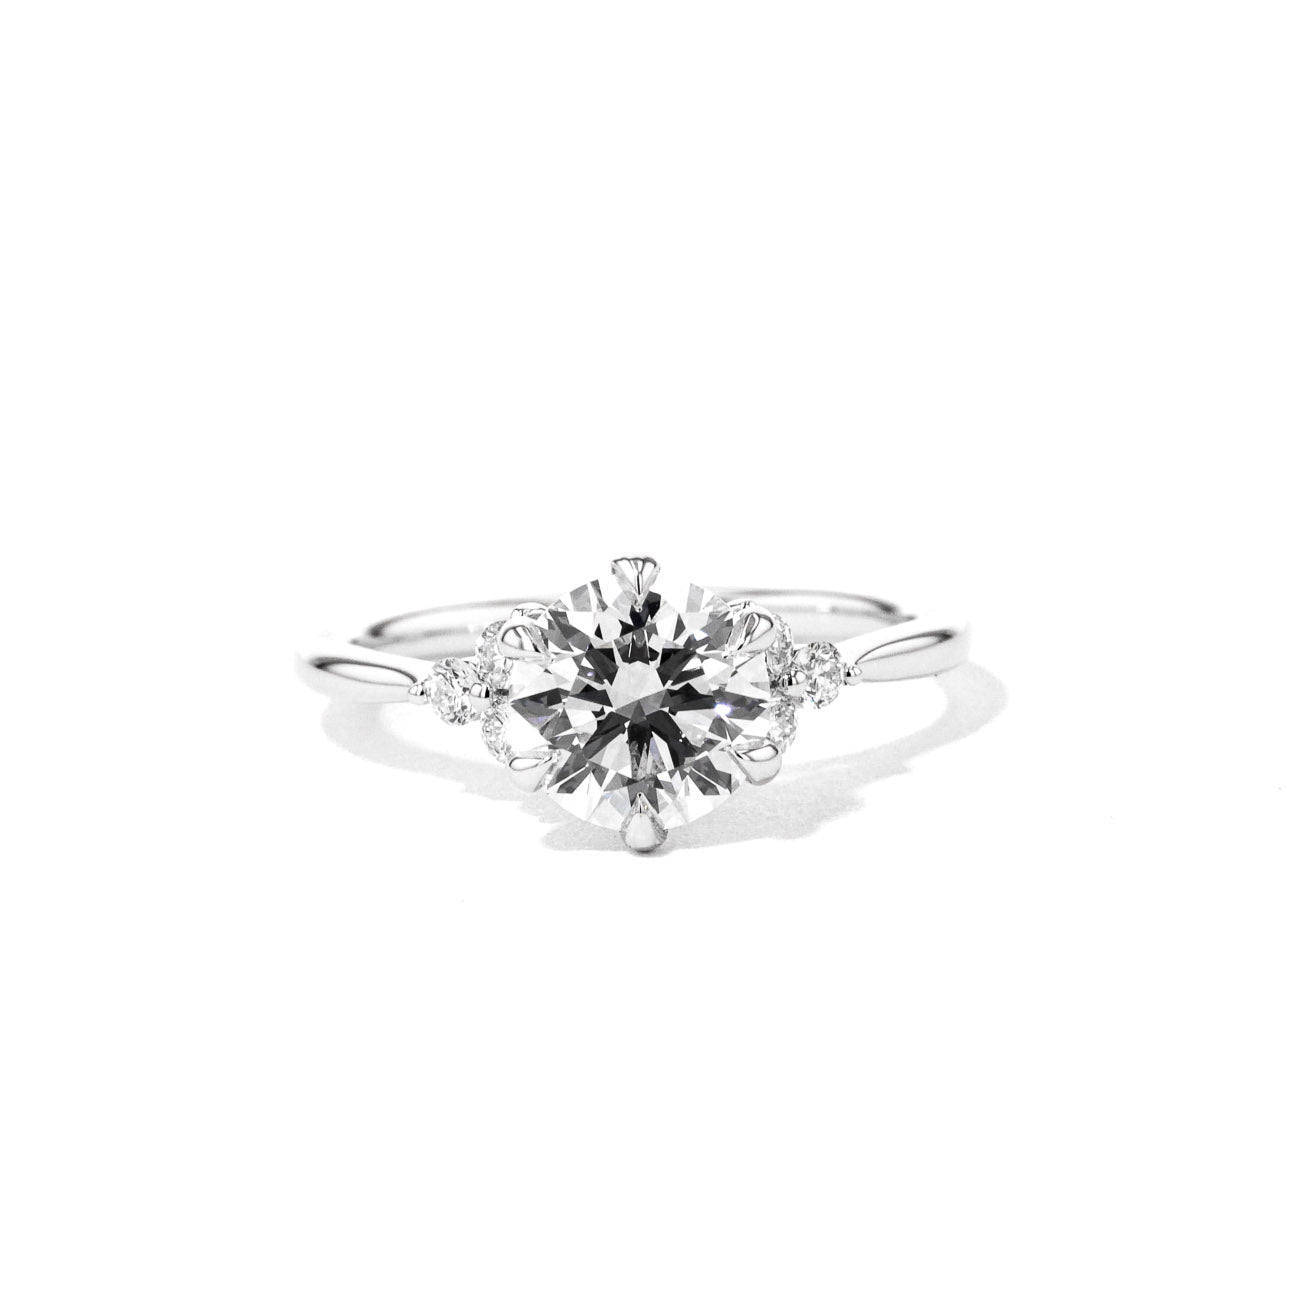 1.6mm Lindsey Round Engagement Rings Princess Bride Diamonds 3 14K White Gold 